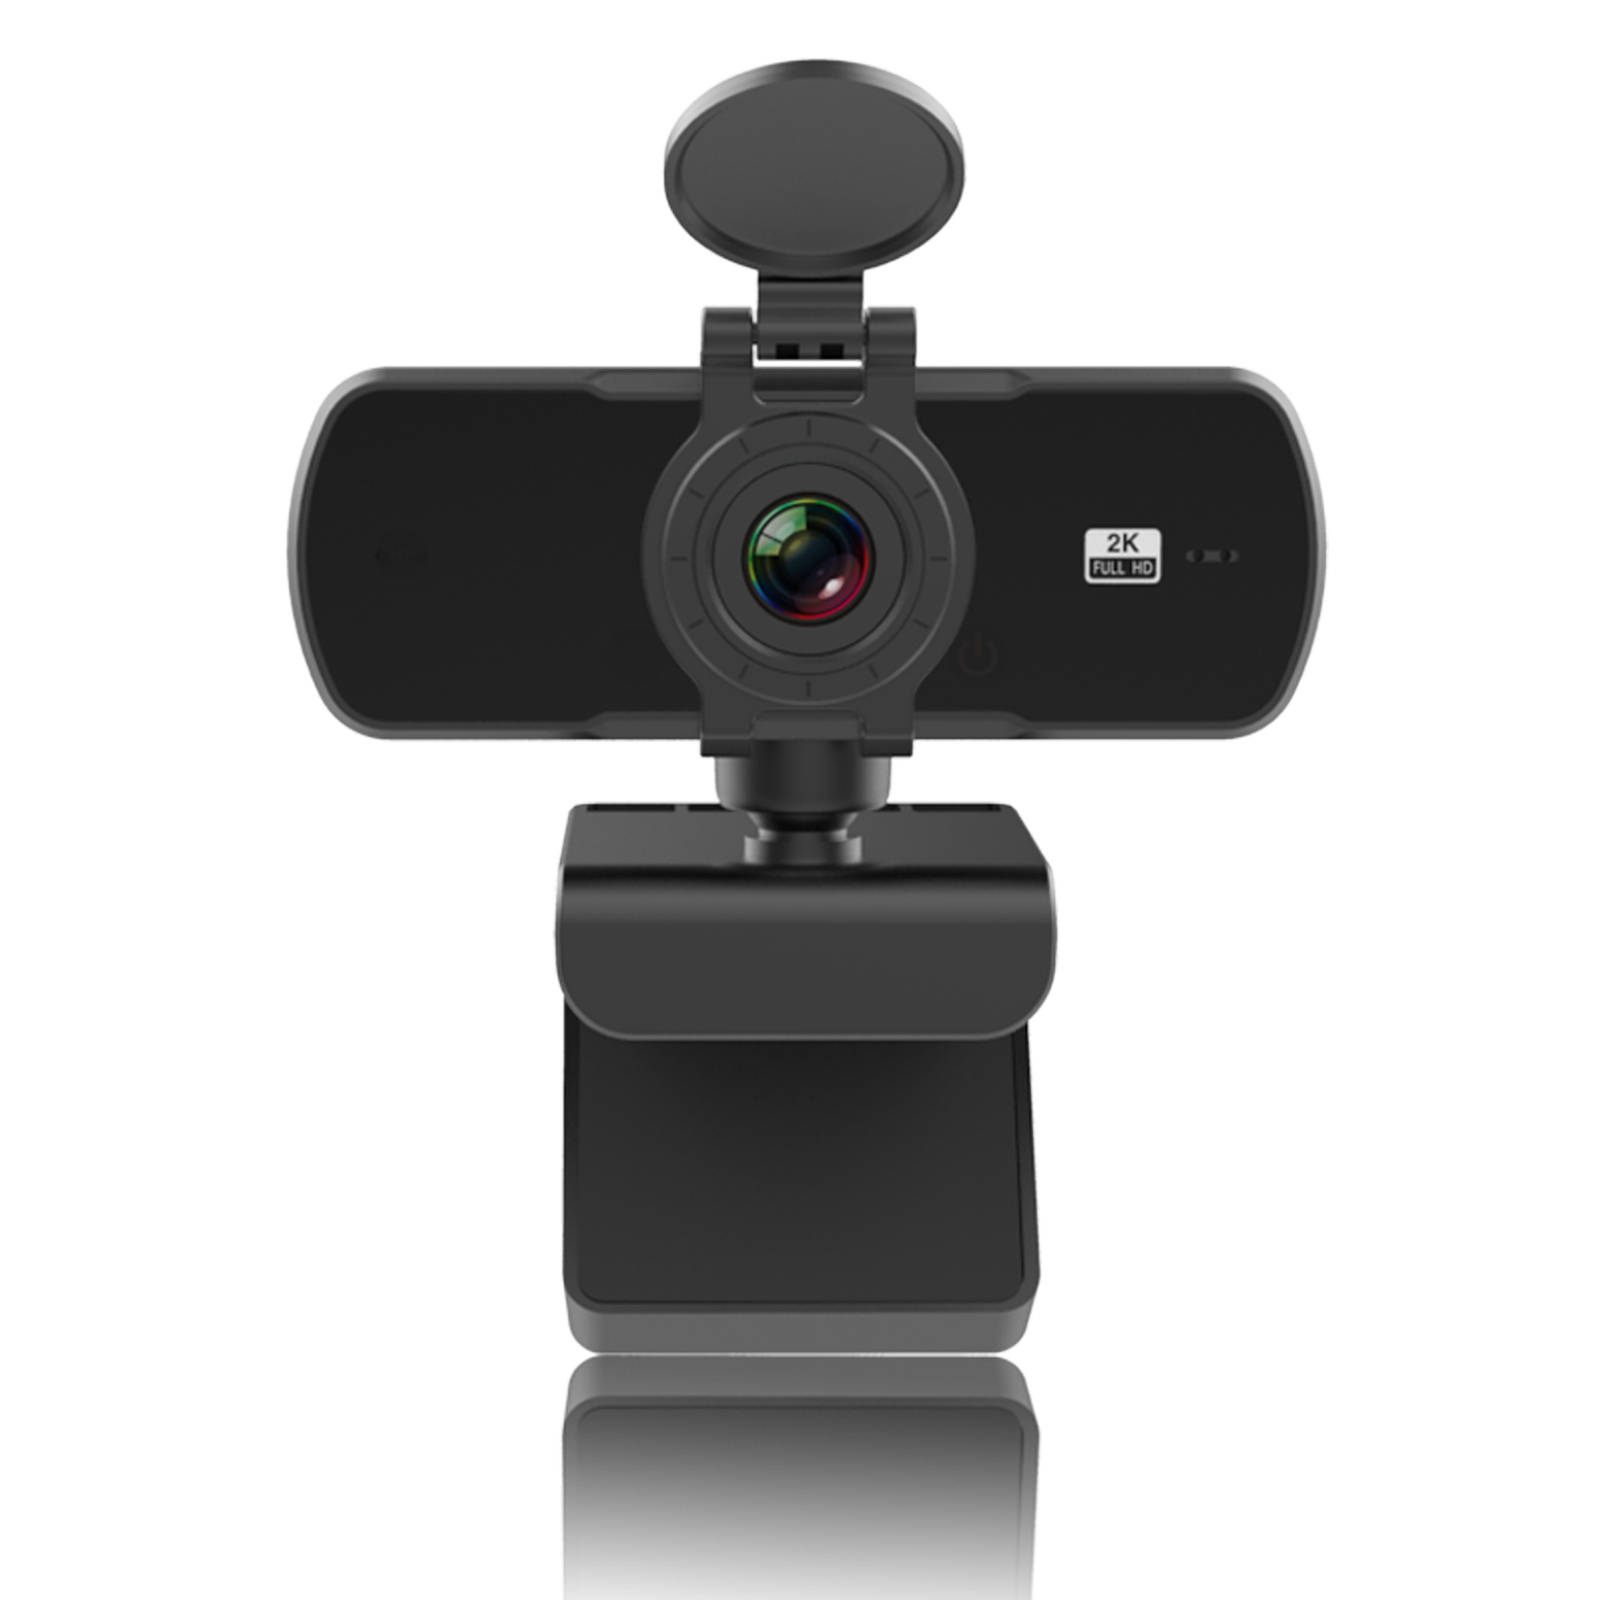 fosmon webcam firmware usb 2.0 driver windows 10